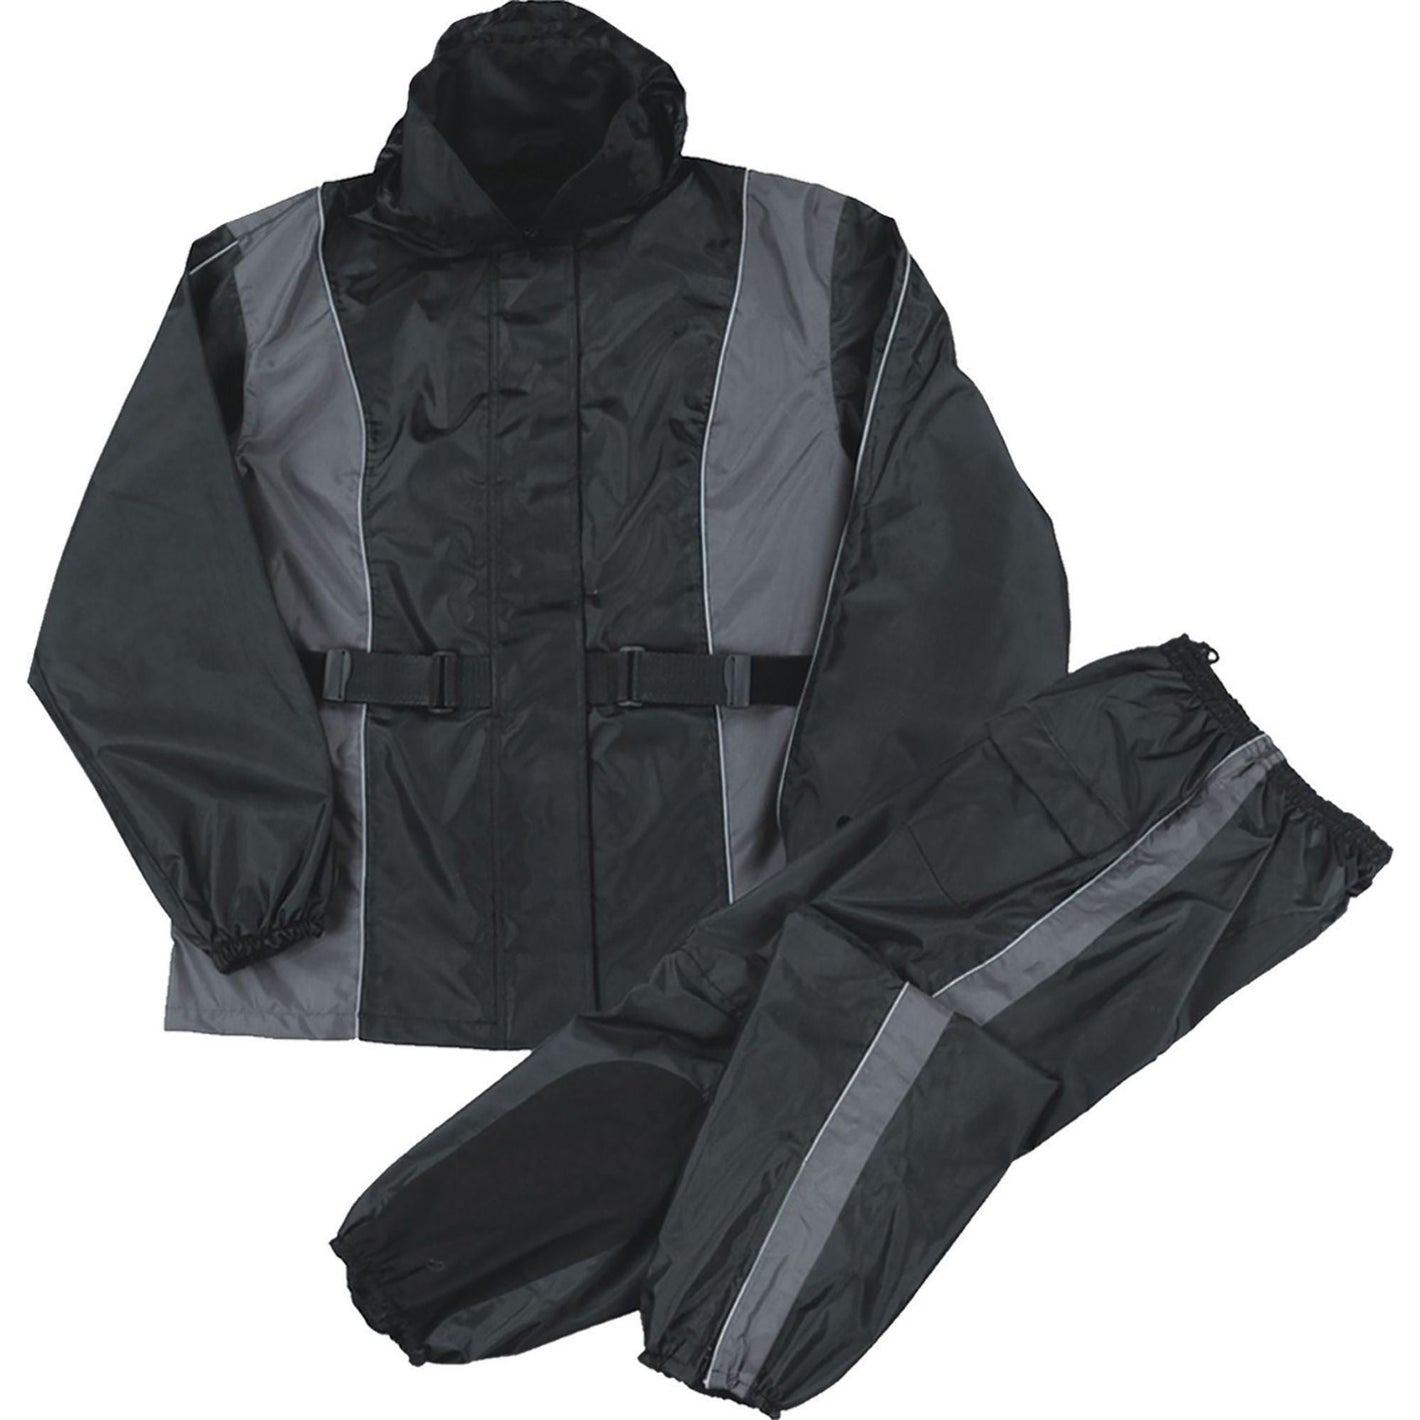 Ladies Black Waterproof Rain Suit w/ Reflective Piping & Heat Guard